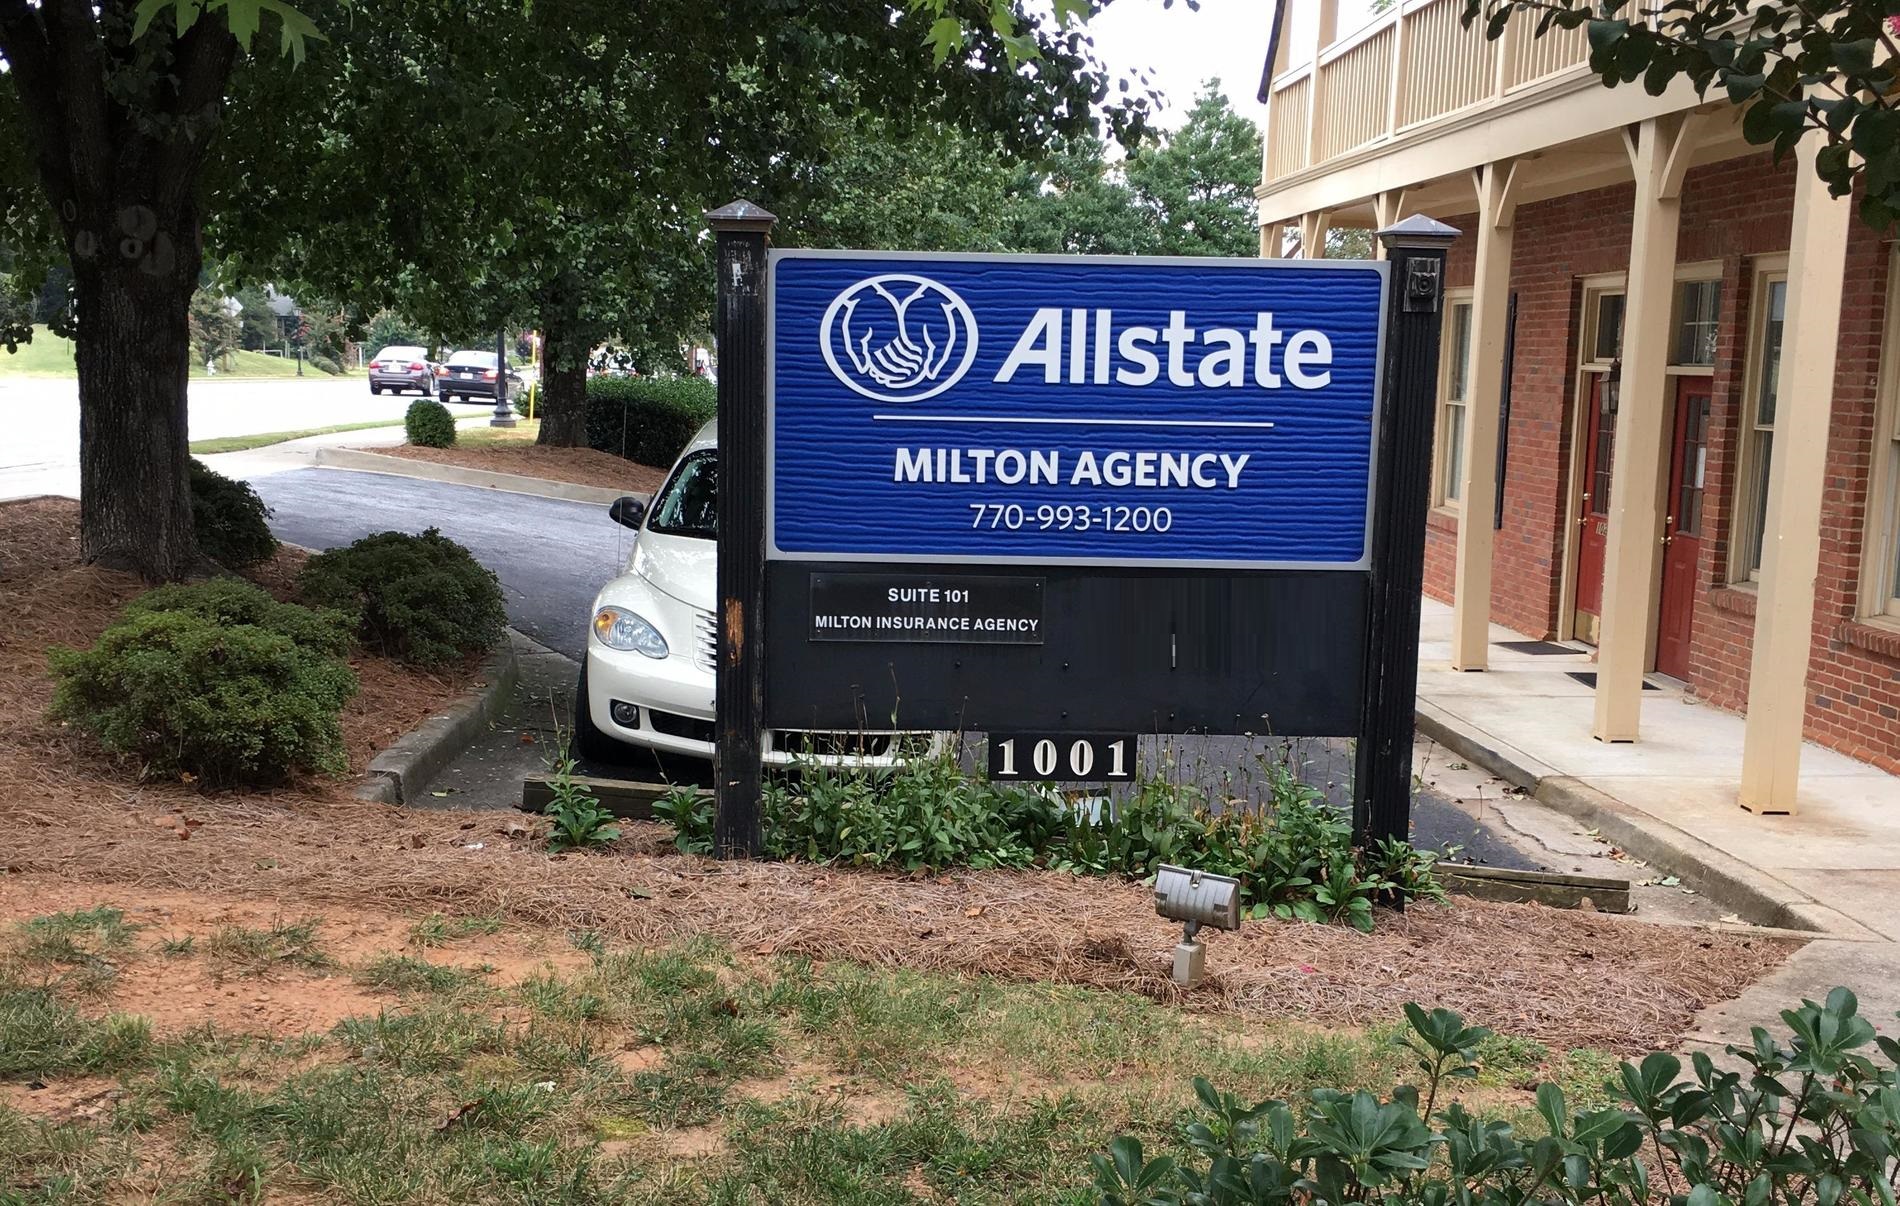 Allstate Car Insurance in Roswell, GA Buddy Milton